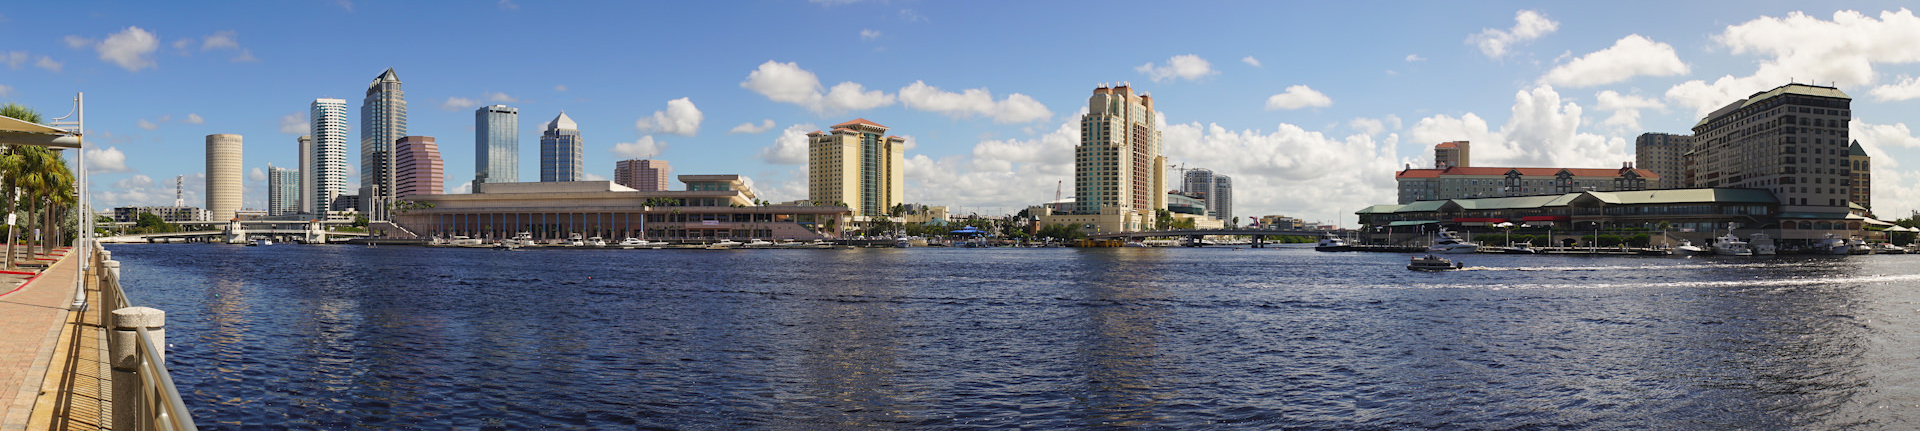 Tampa Waterside Channel